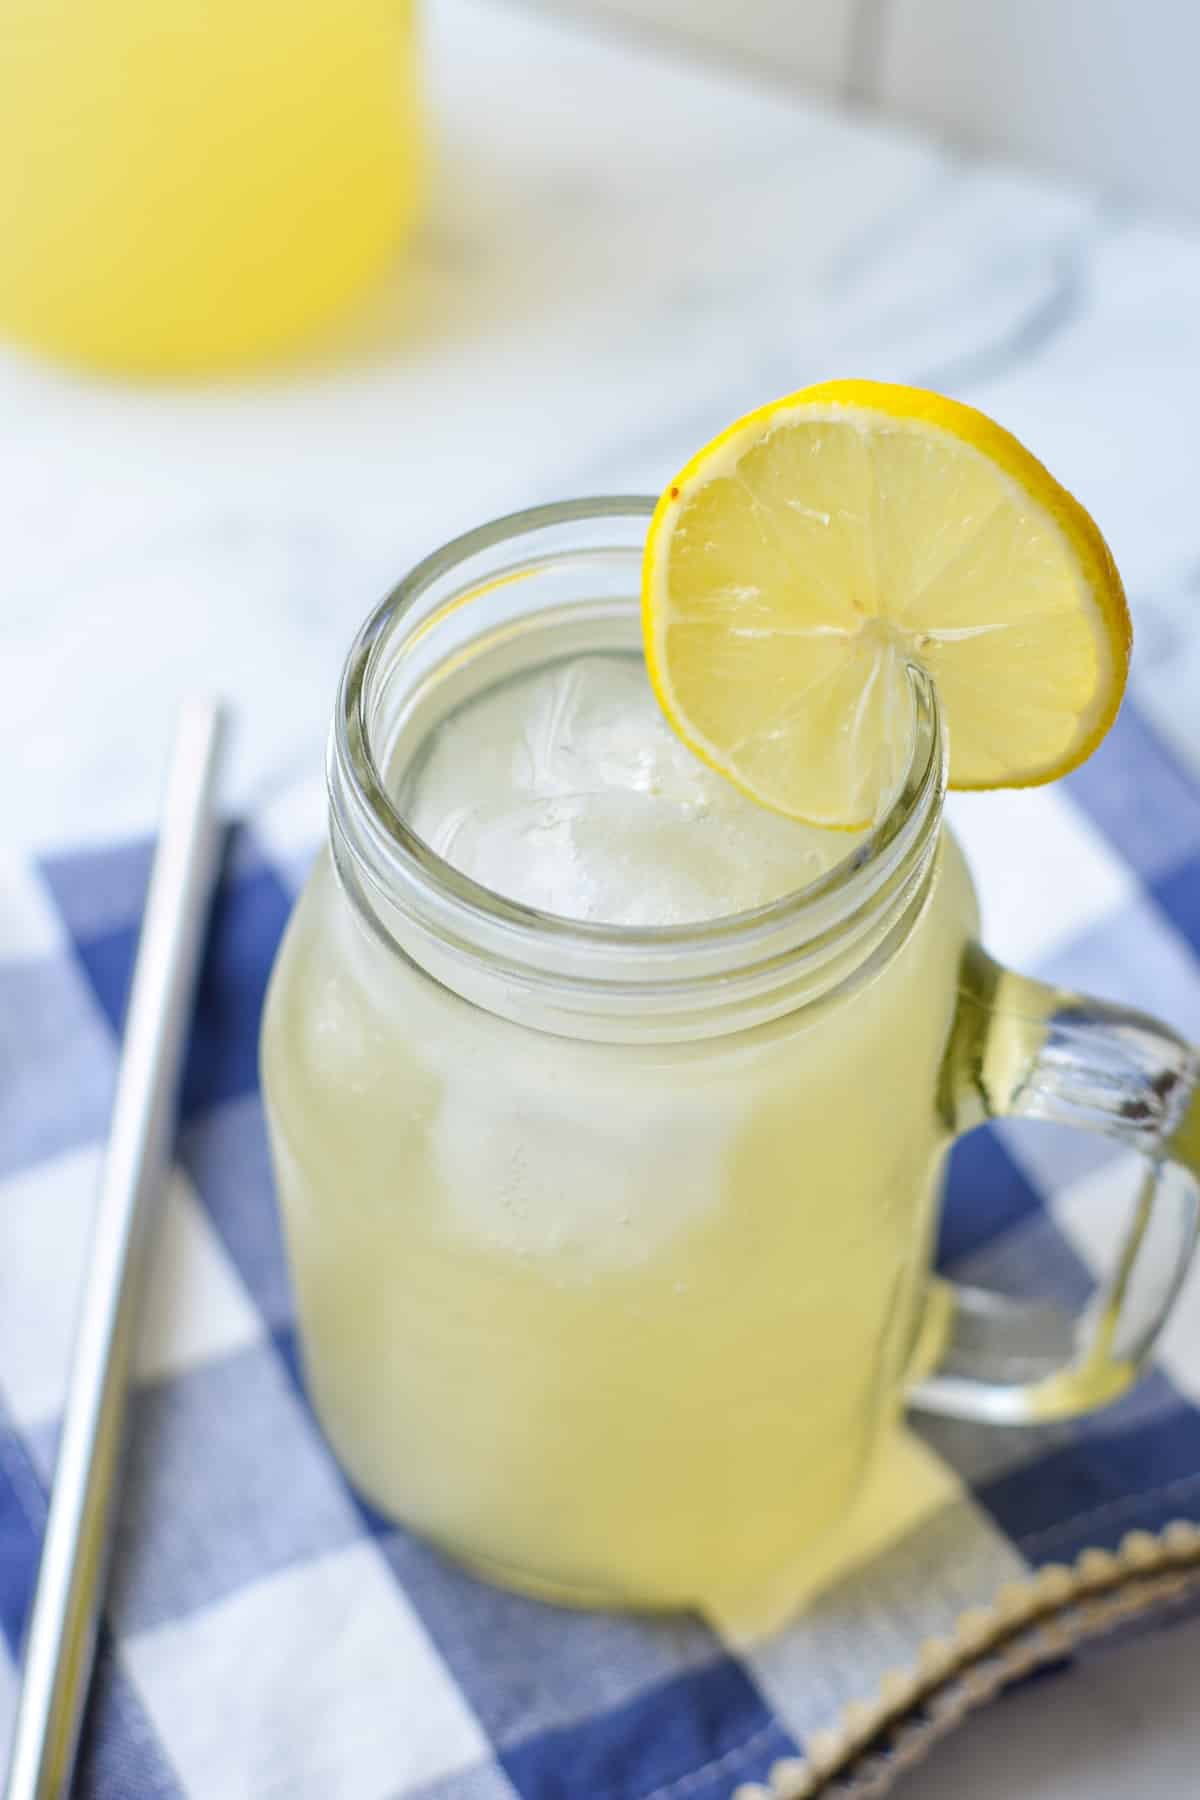 A close up of a jar filled with a lemon based beverage.